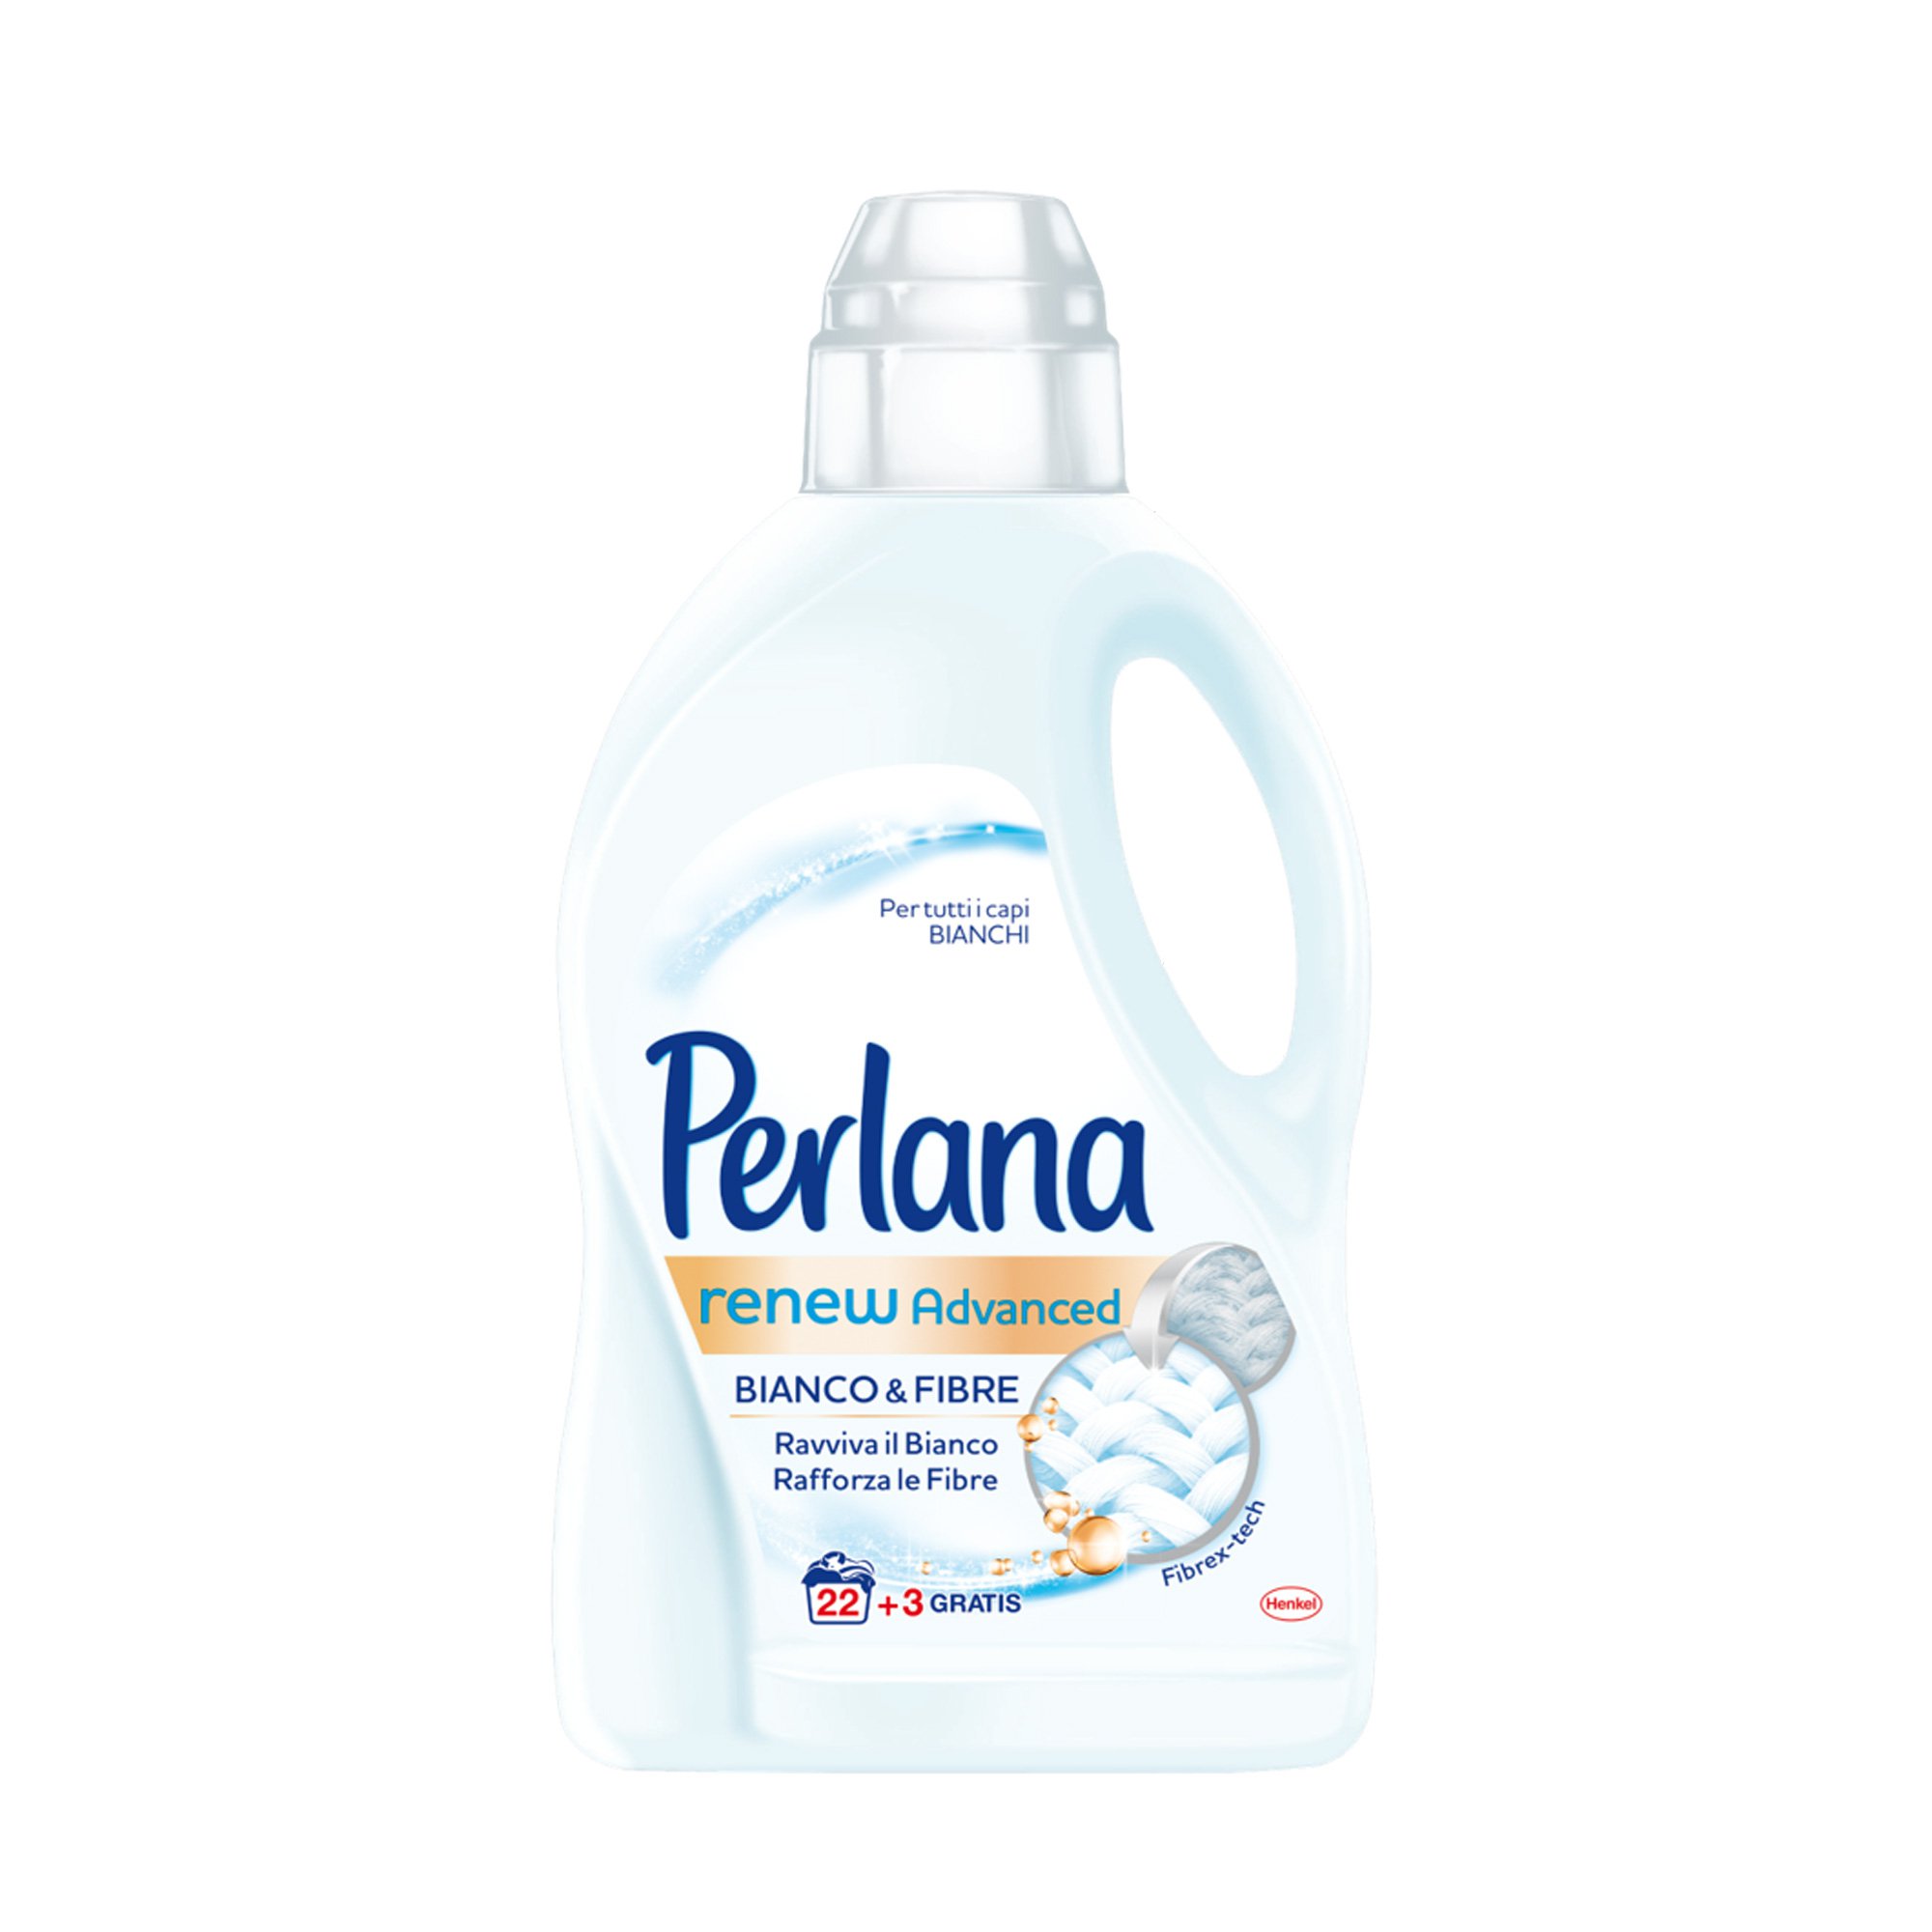 Perlana Renew Advanced Bianco & Fibre